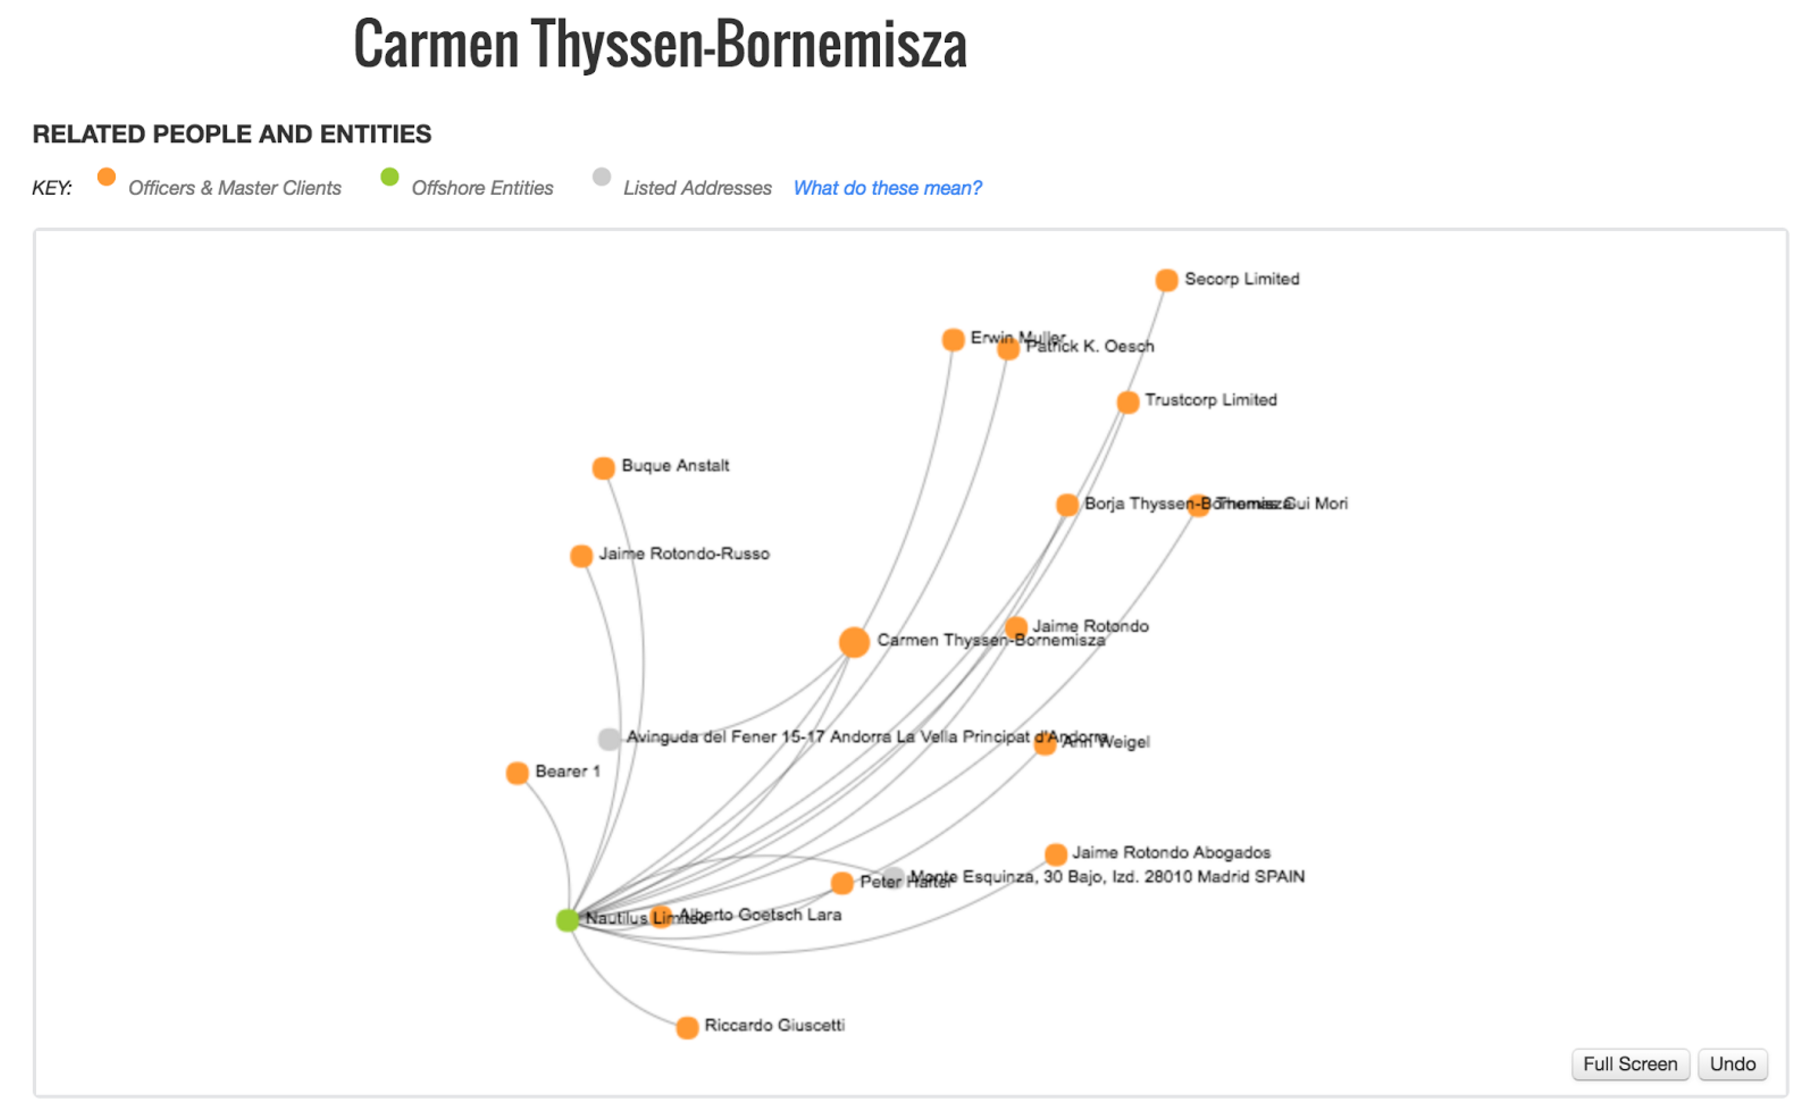 carmen thyssen-bornemisza graph visualization